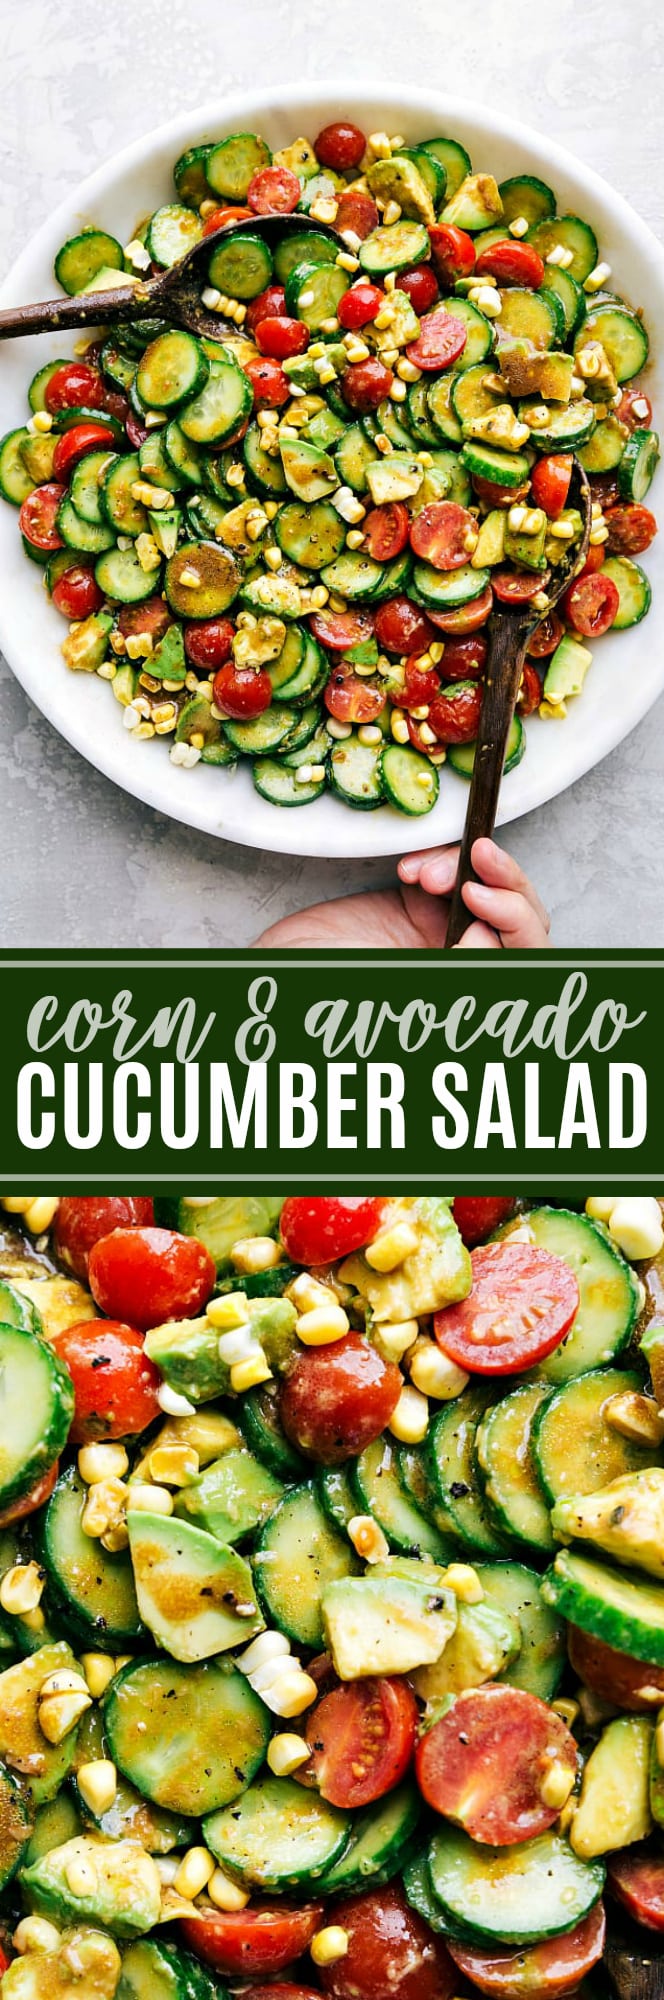 The ultimate BEST EVER cucumber, corn, and avocado salad!! via chelseasmessyapron.com | #corn #avocado #salad #cucumber #healthy #potluck #summer #eat #side #dish #party #easy #quick #cornoncob #tomato #cherry #balsamic #dressing #vinegar #health